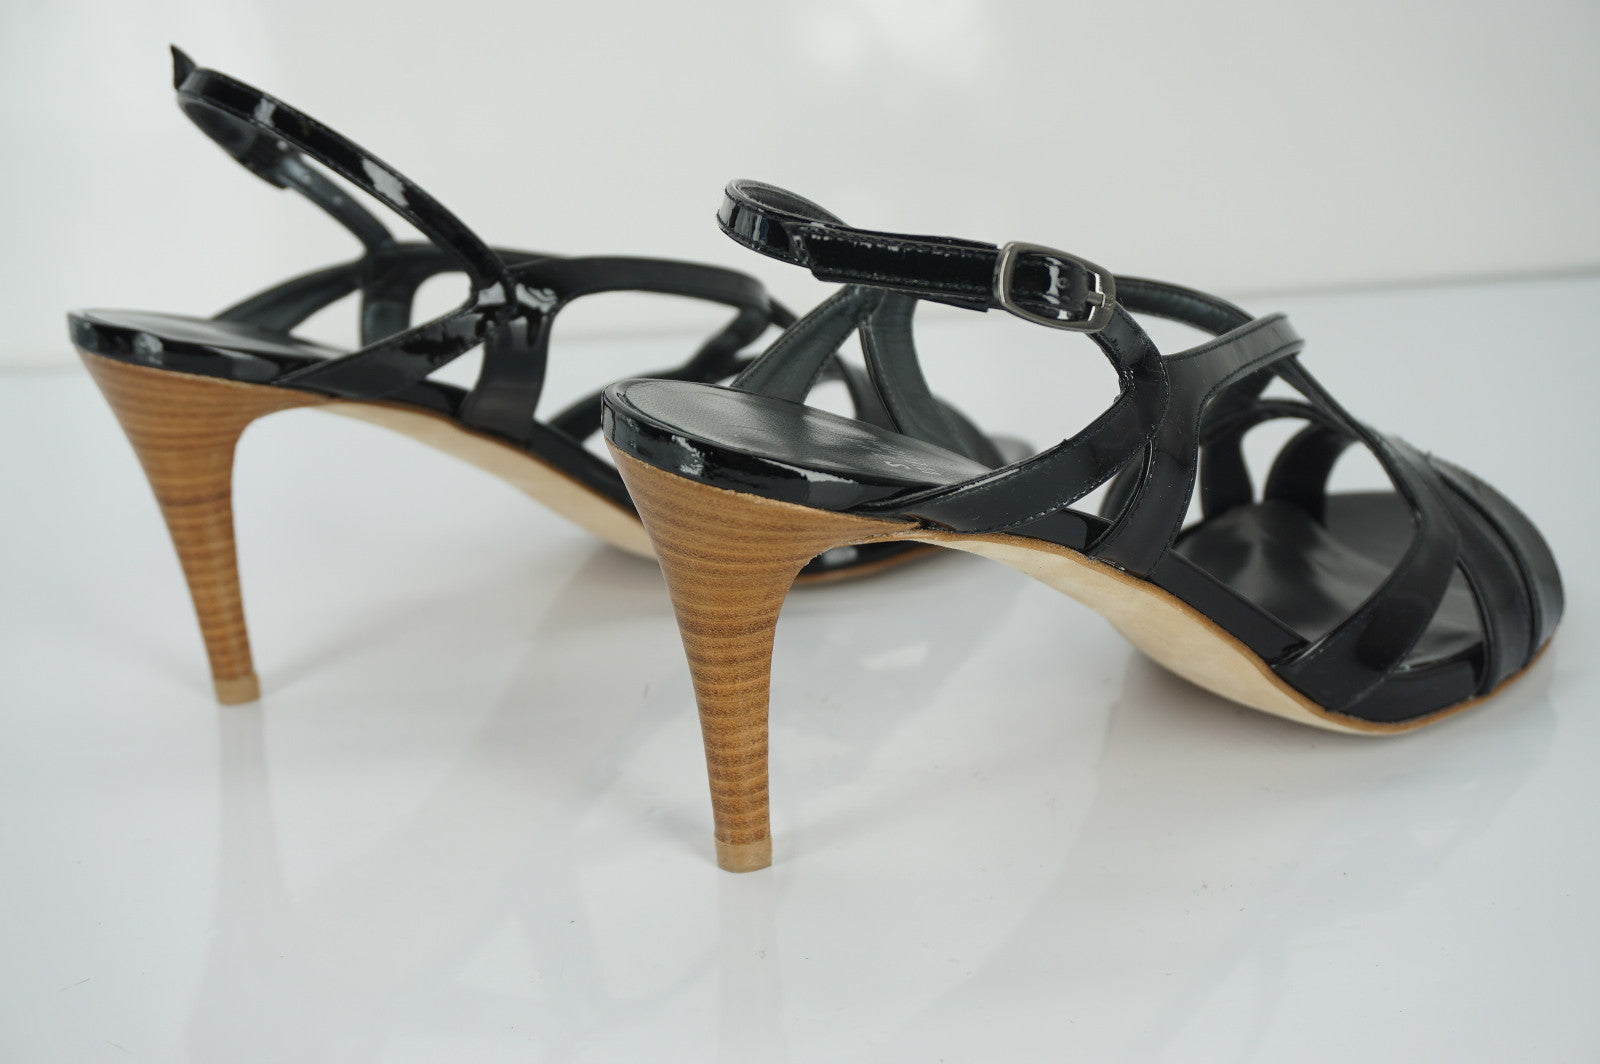 Stuart Weitzman Black Patent Leather Operetta Strappy Sandals Size 8 NIB $375 Sz